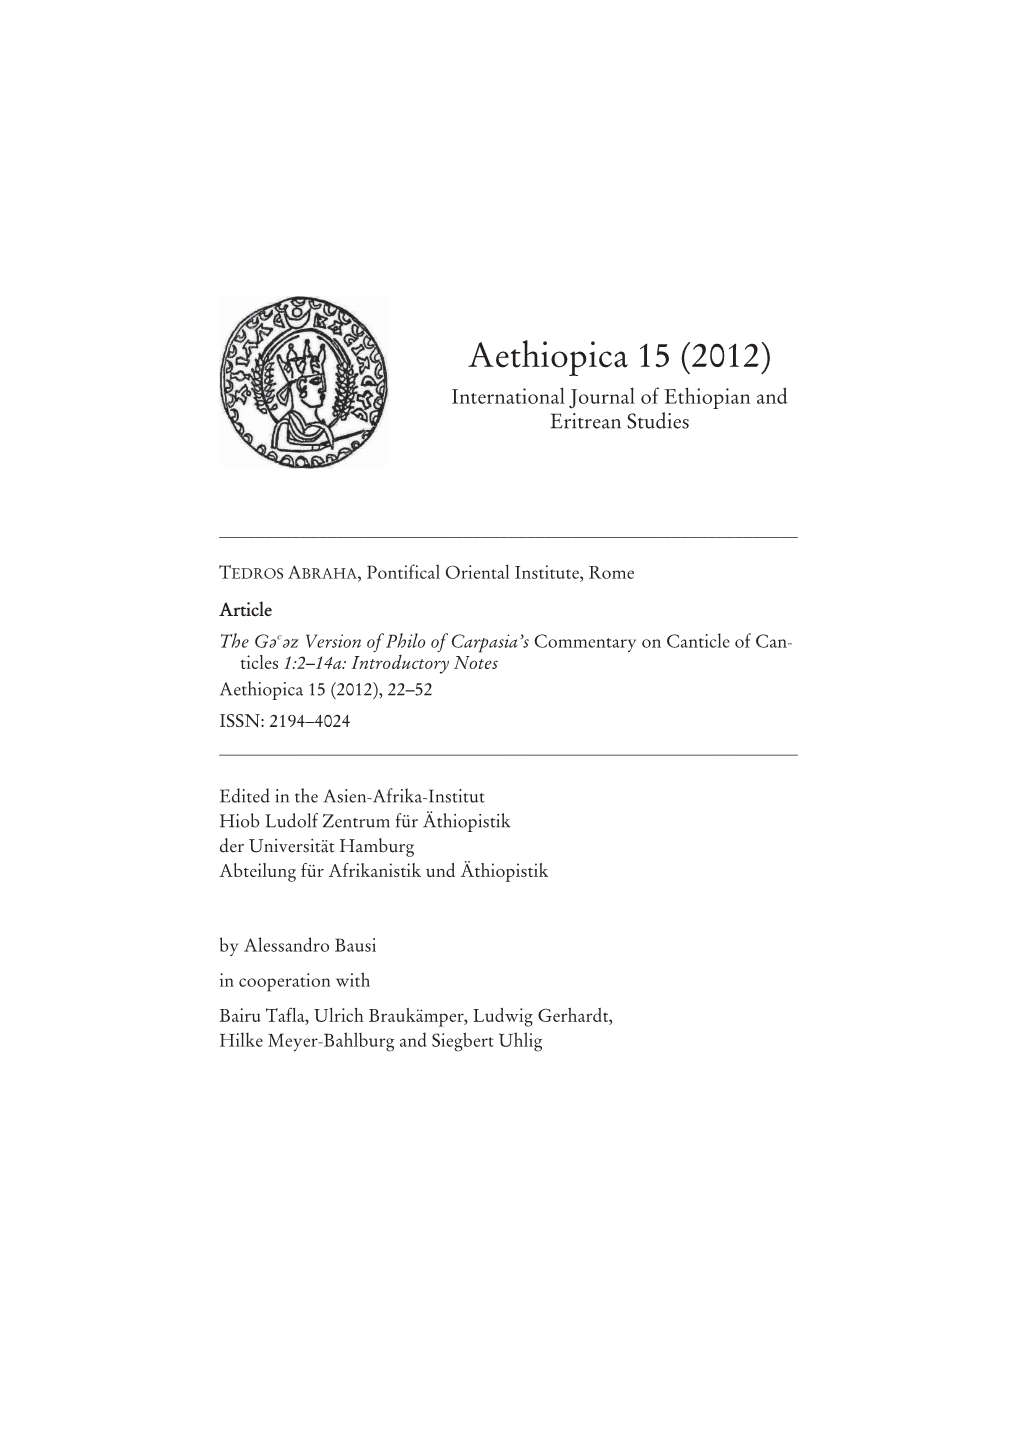 Aethiopica 15 (2012) International Journal of Ethiopian and Eritrean Studies